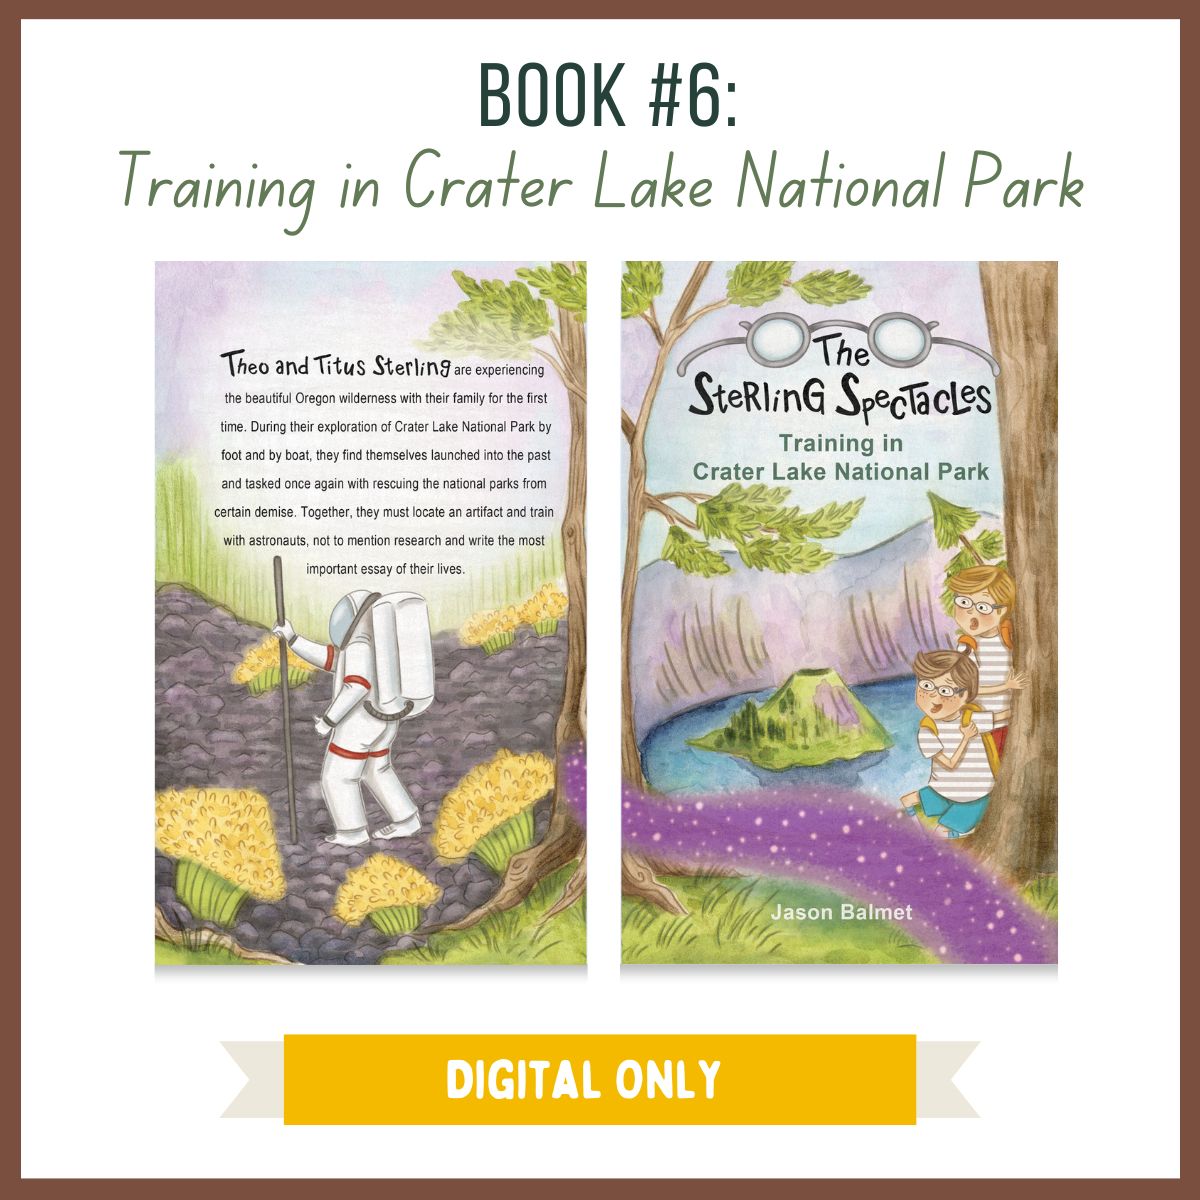 Book #6: Training in Crater Lake National Park - DIGITAL